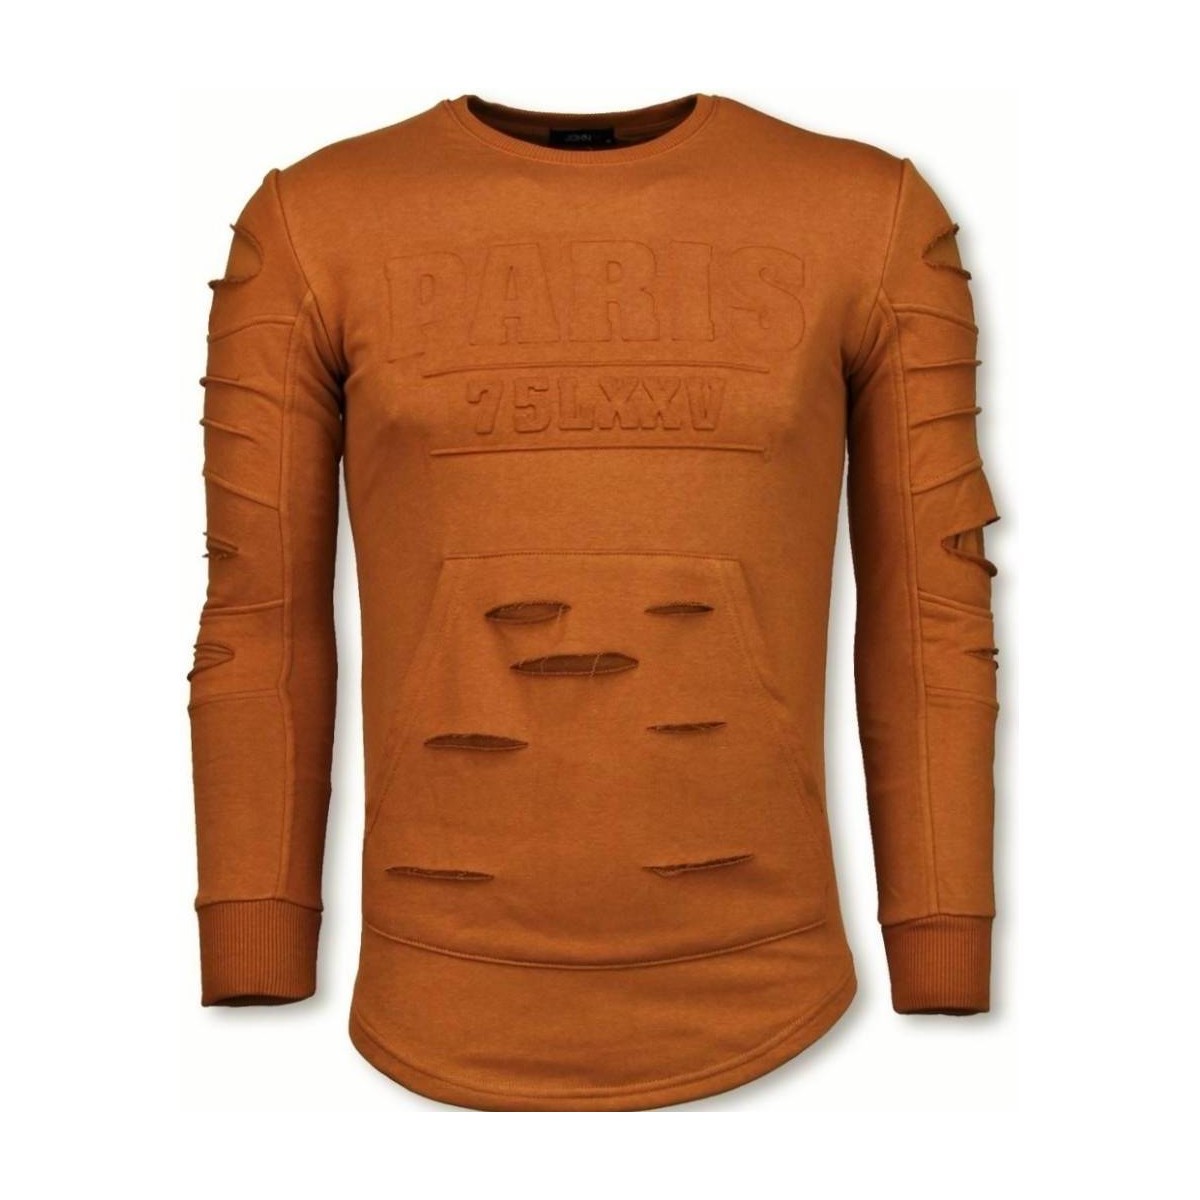 Textiel Heren Sweaters / Sweatshirts Justing D Stamp PARIS Damaged Oranje Orange